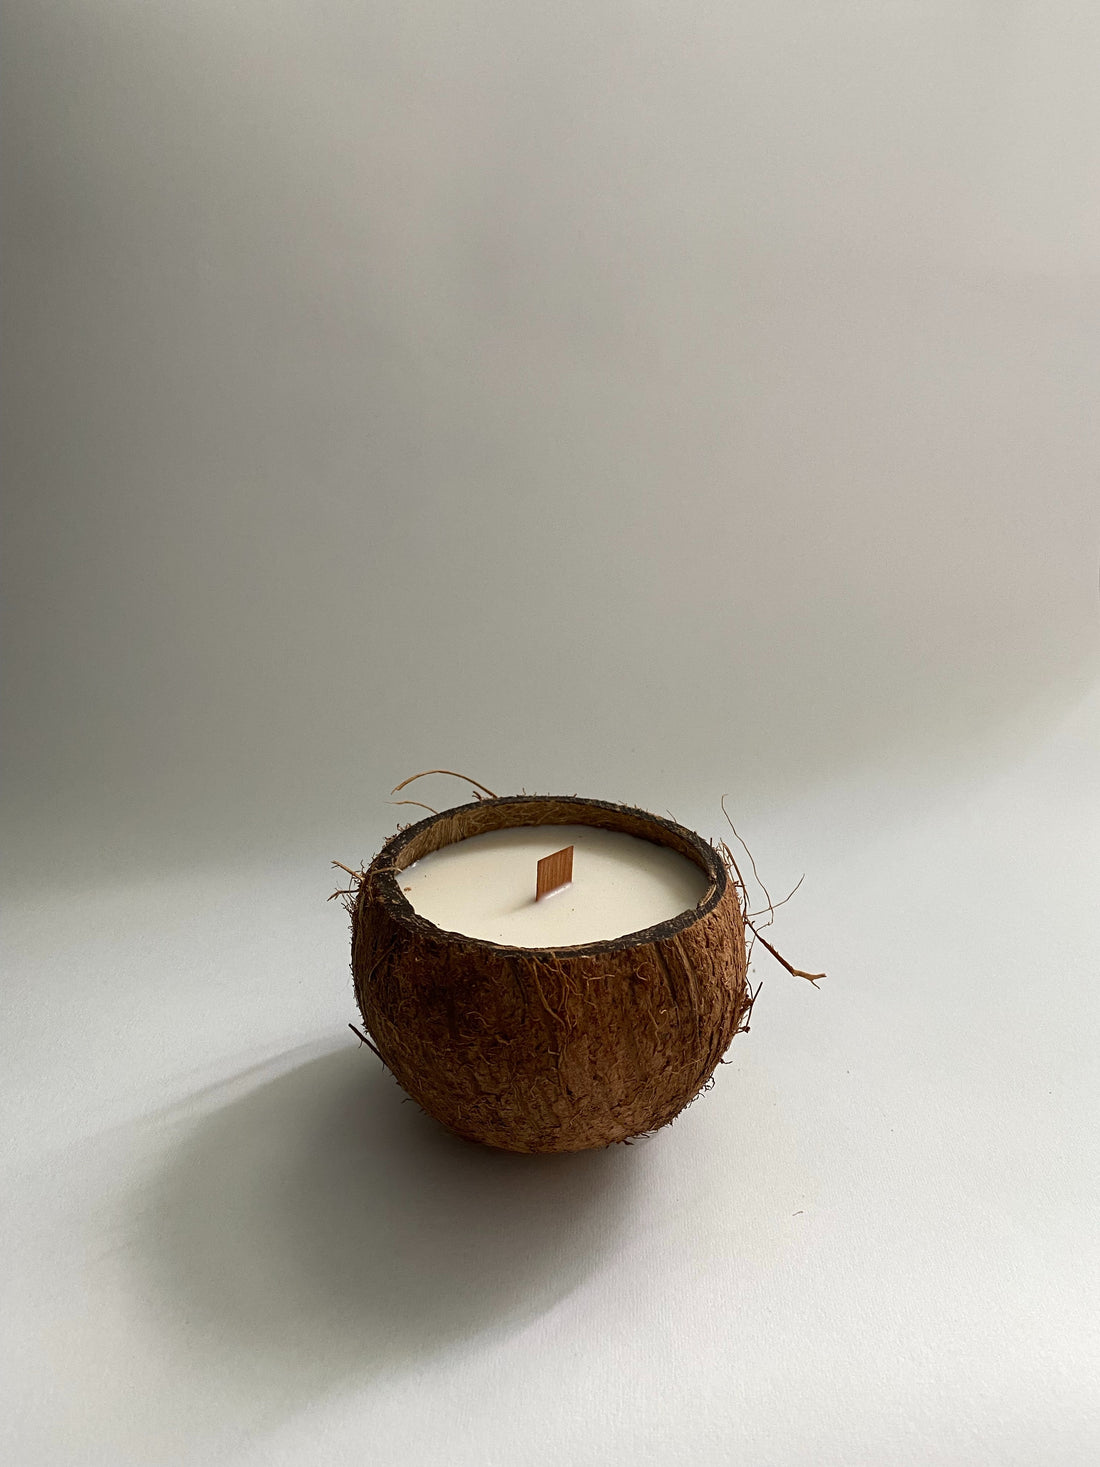 Is Coconut Wax safe?